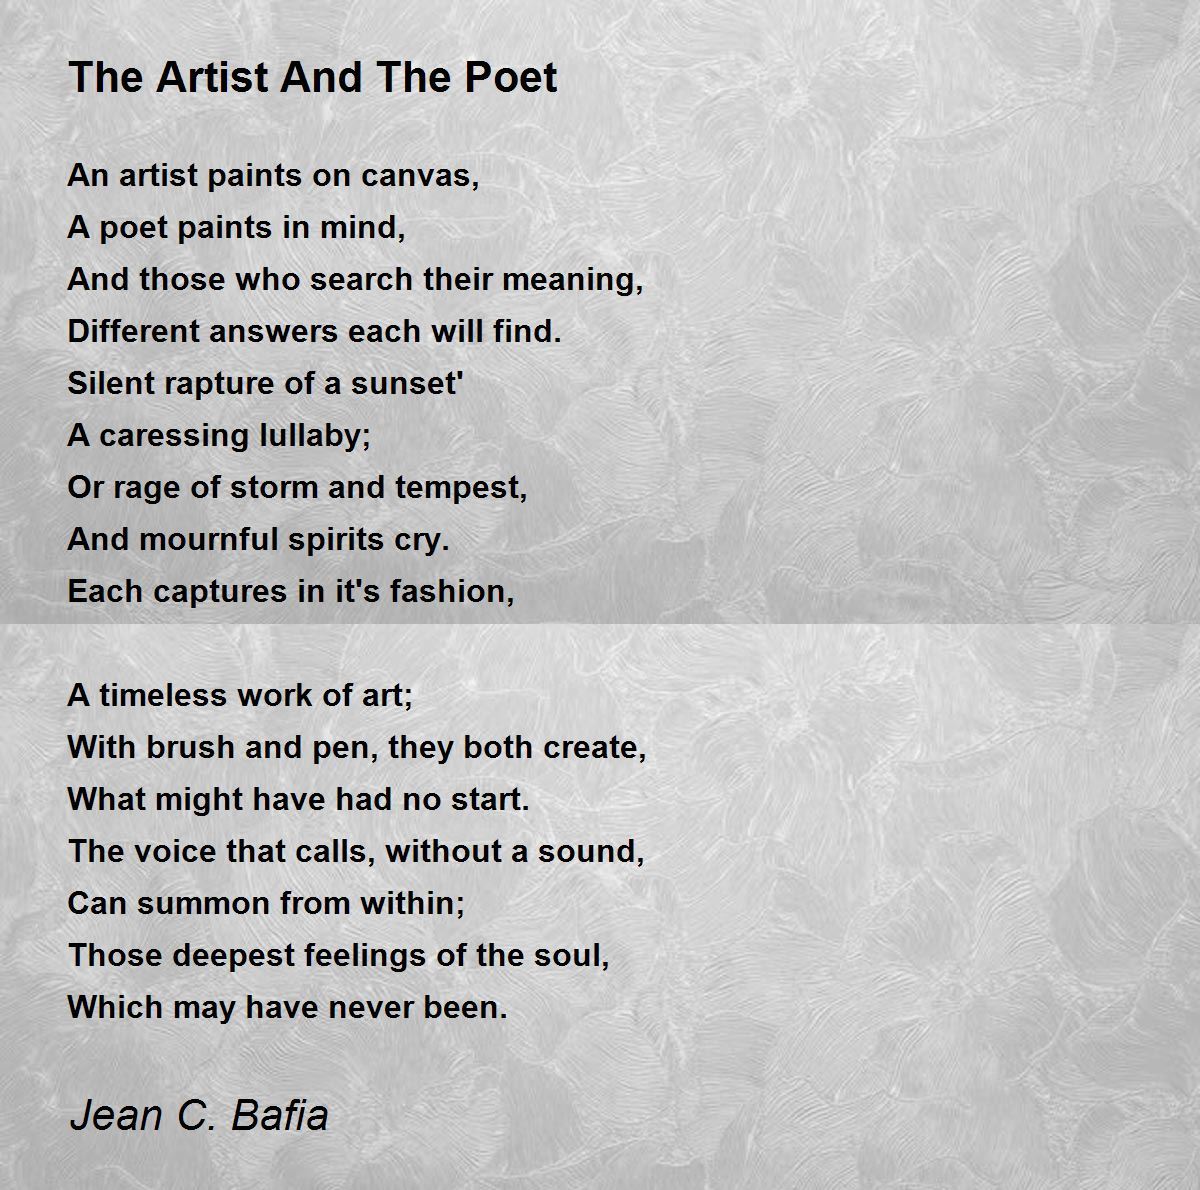 The Artist And The Poet The Artist And The Poet Poem By Jean C Bafia